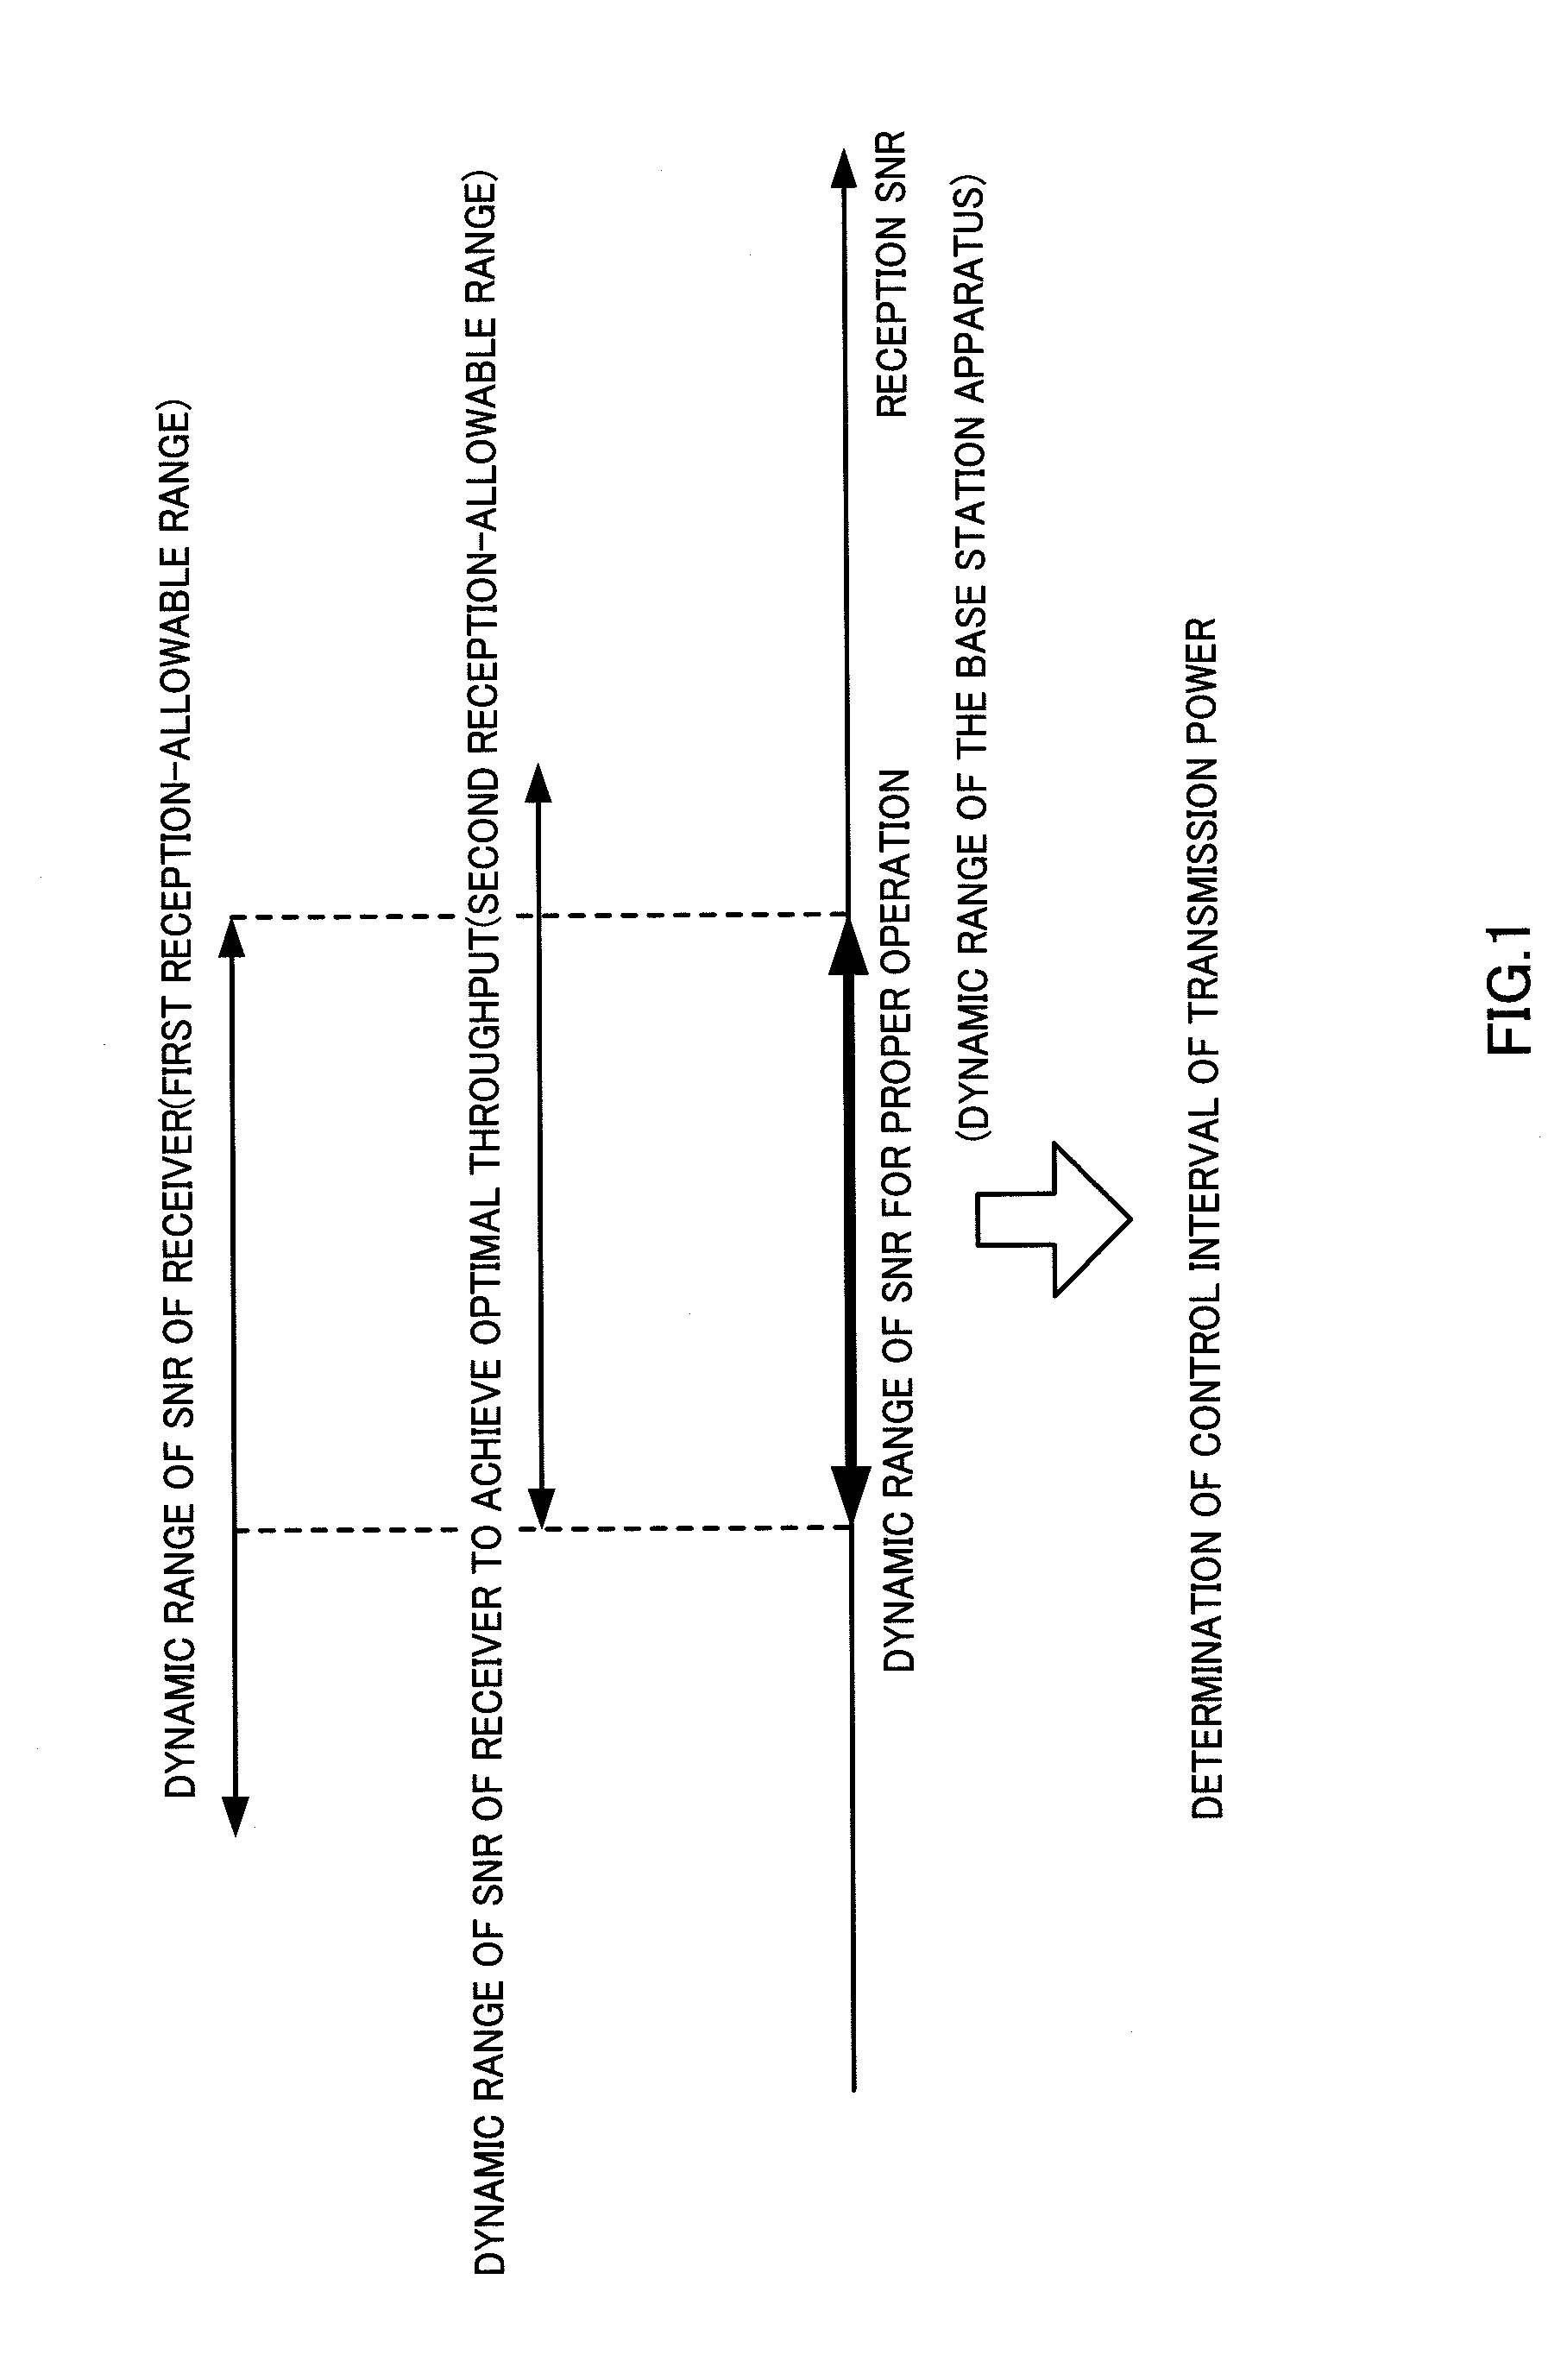 Closed-loop transmission power control method and radio base station apparatus